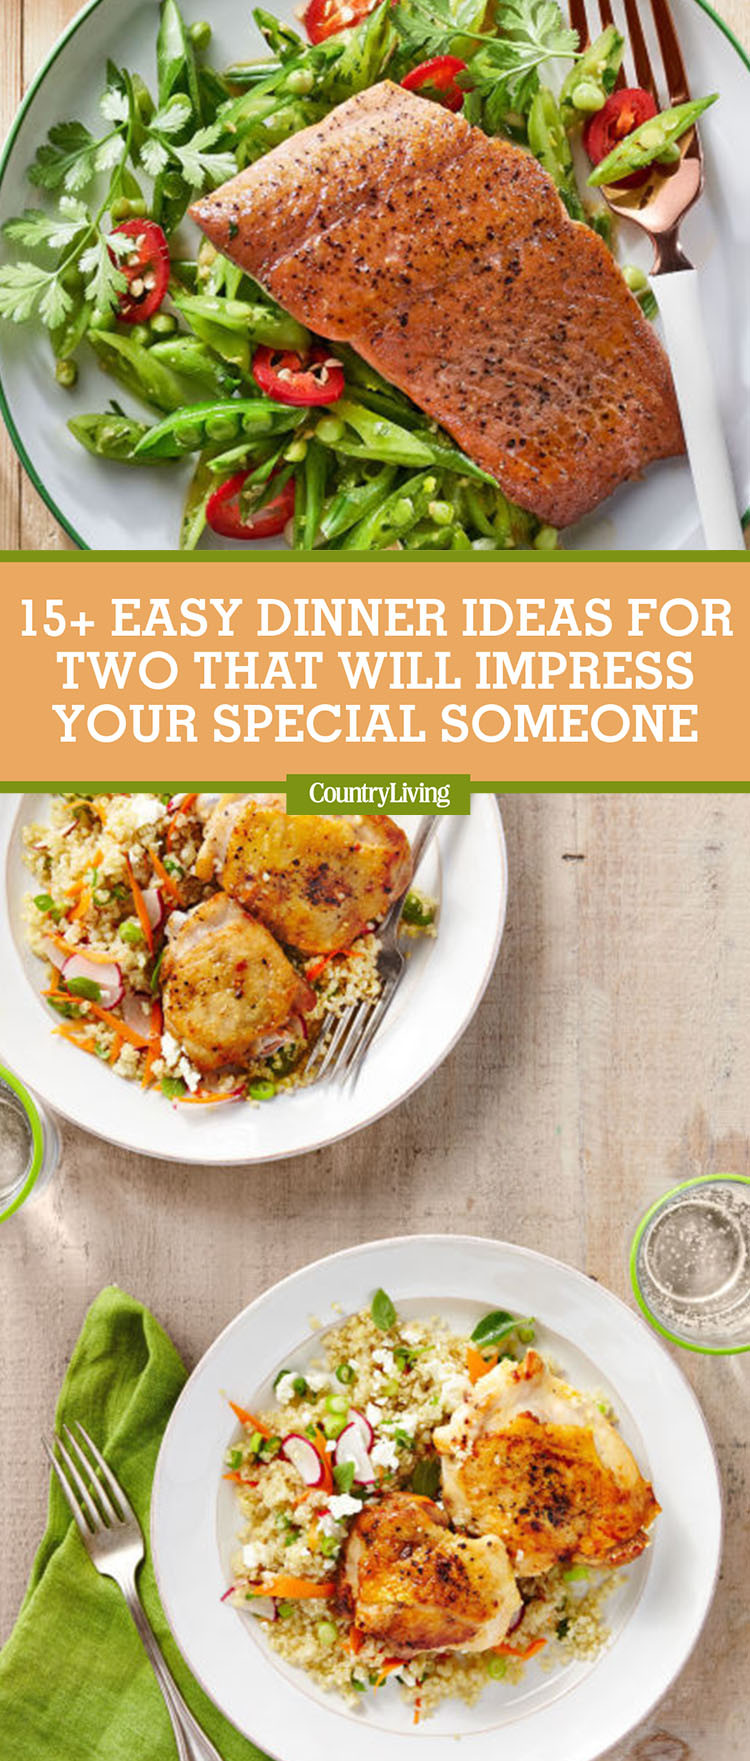 Easy Dinner Ideas For Two
 17 Easy Dinner Ideas for Two Romantic Dinner for Two Recipes